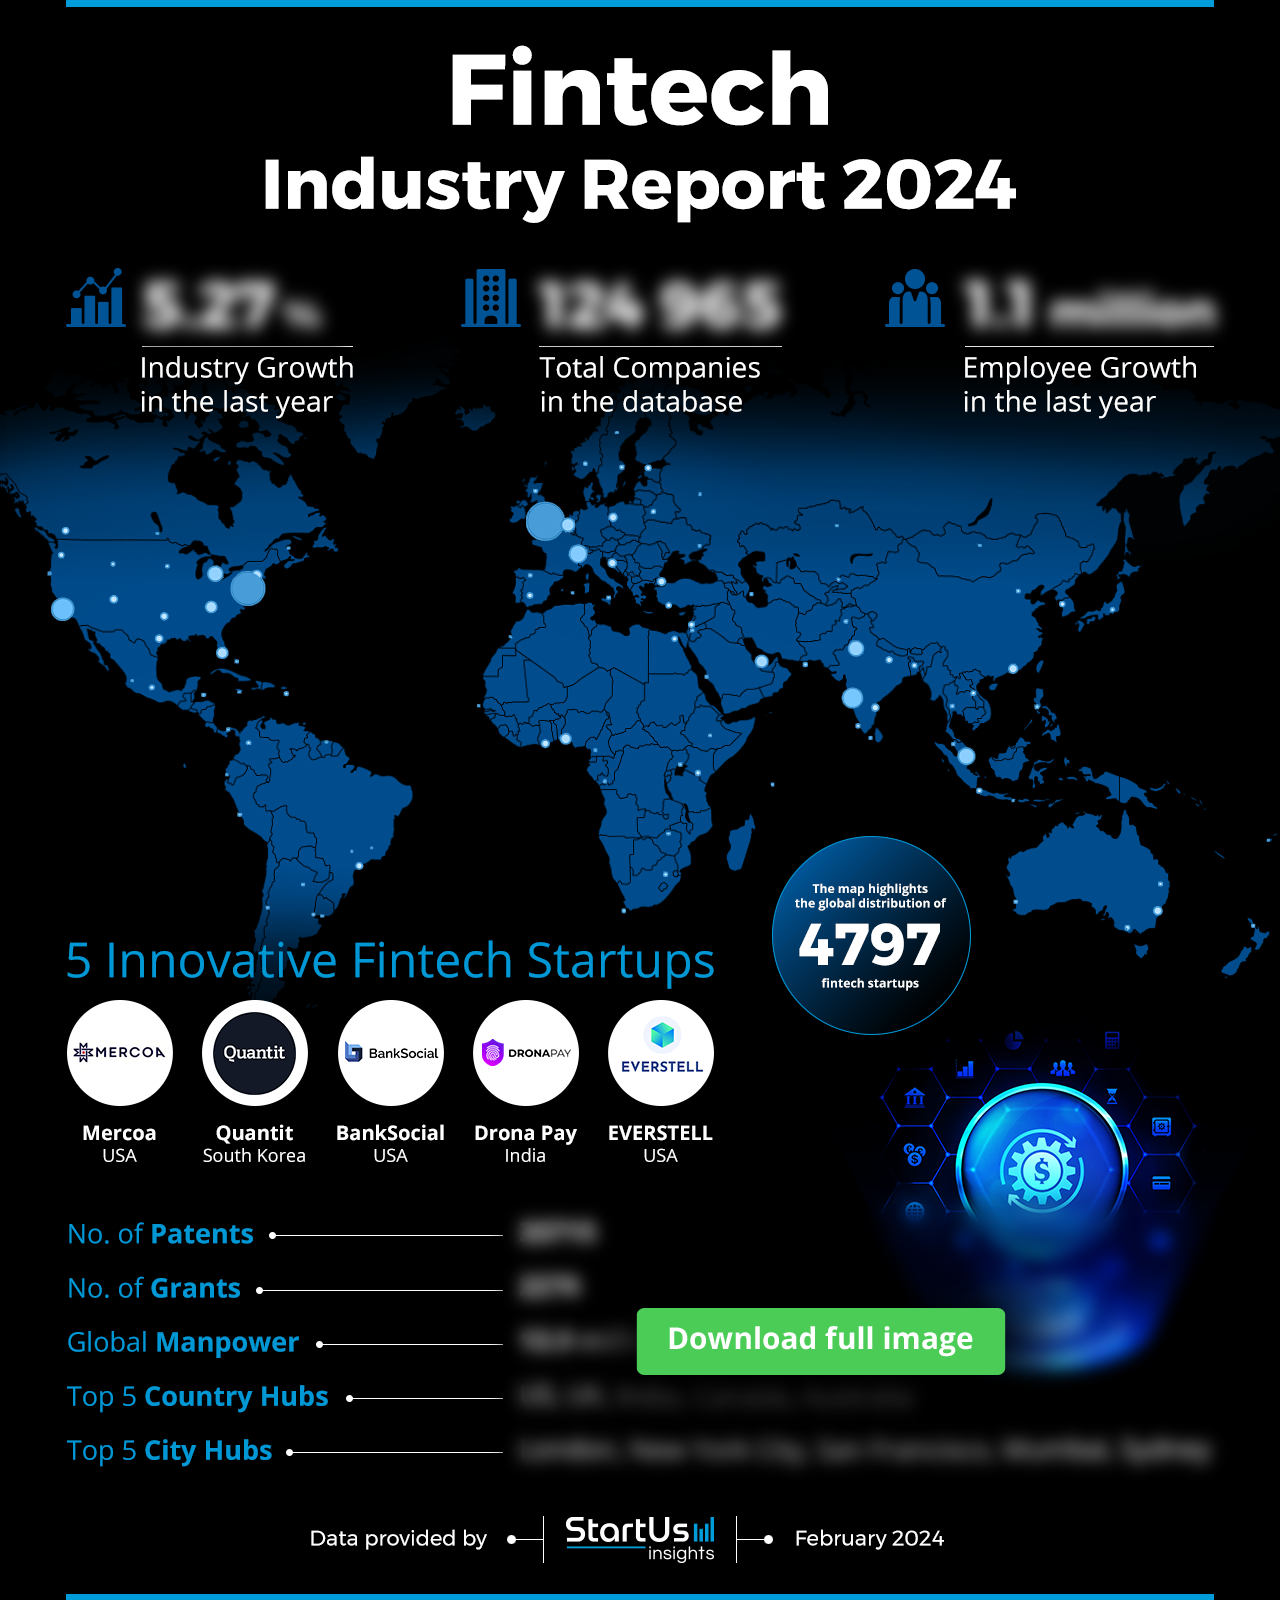 Fintech-Industry-Report-HeatMap-Blurred-StartUs-Insights-noresize